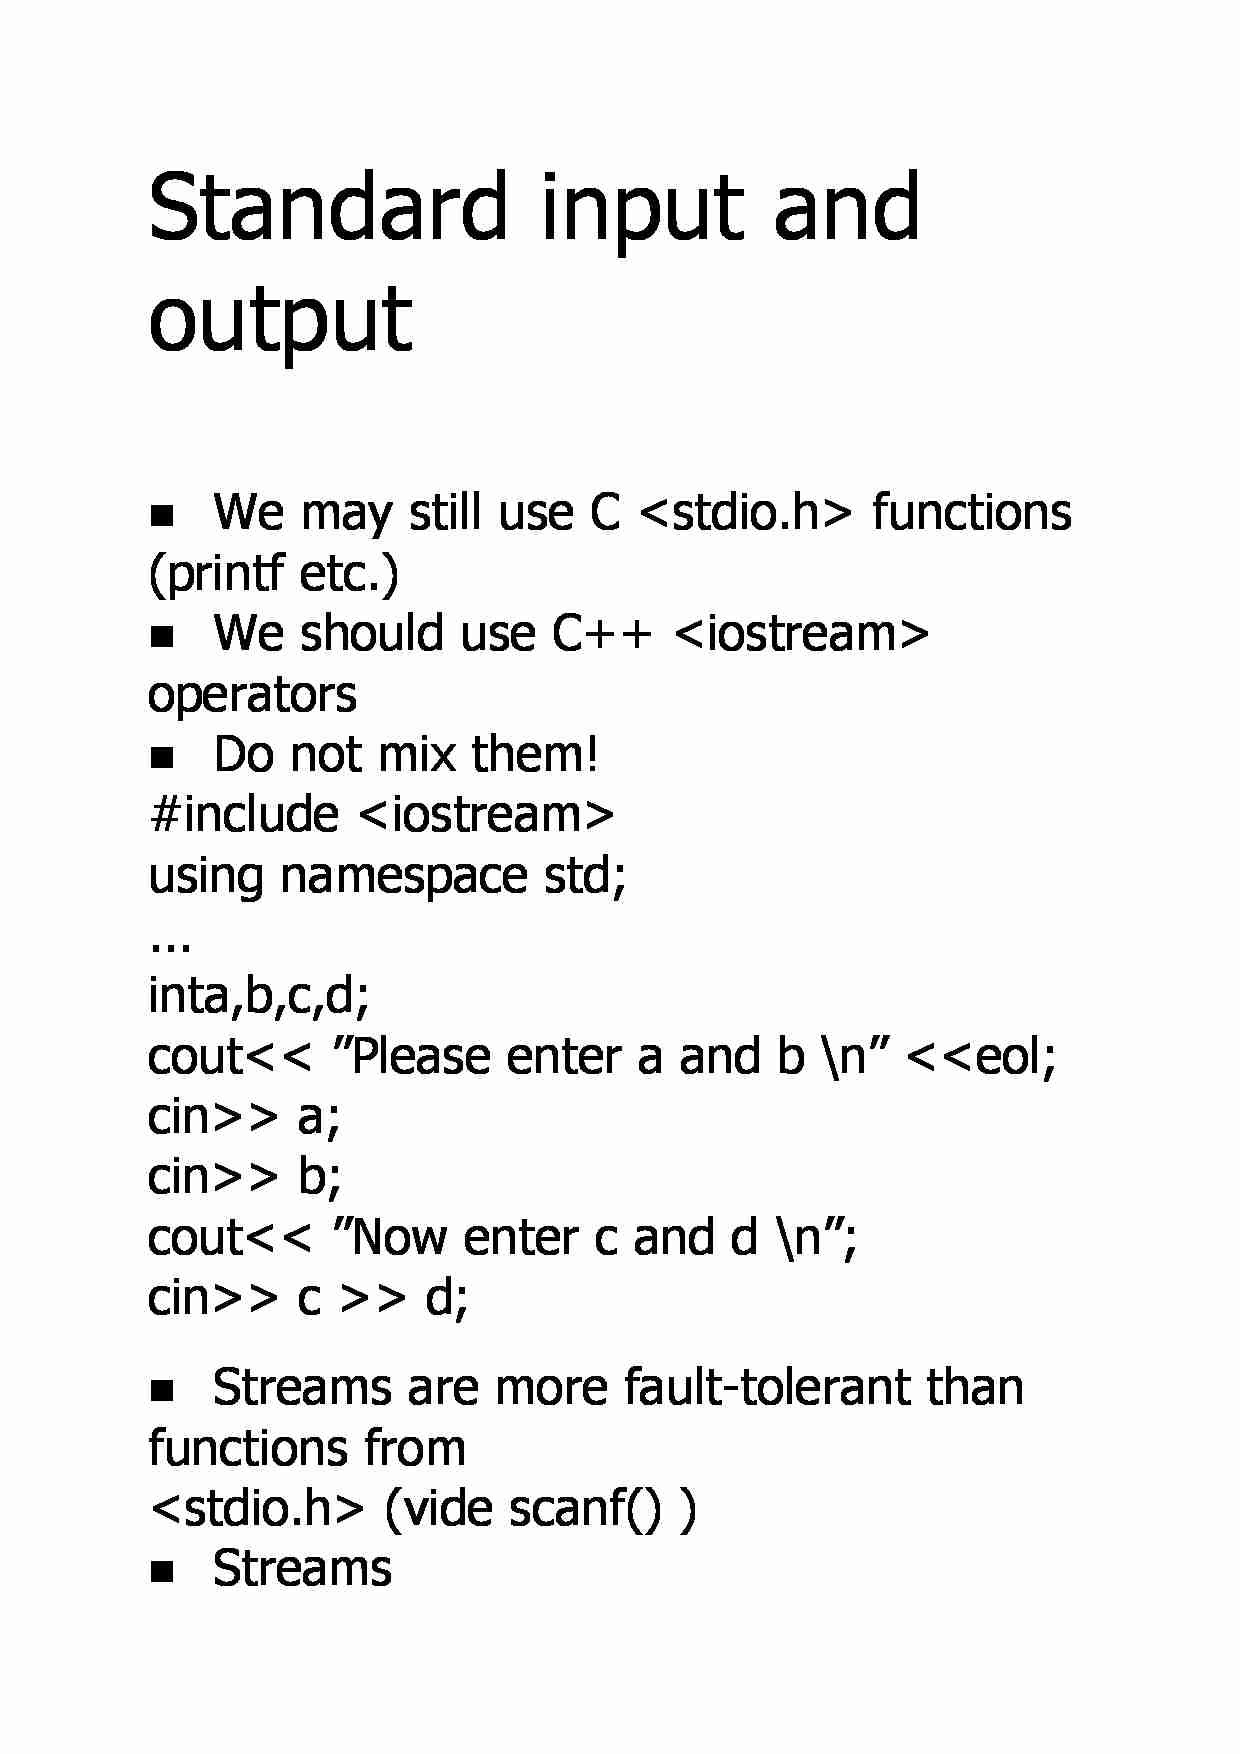 Standard input and output - strona 1